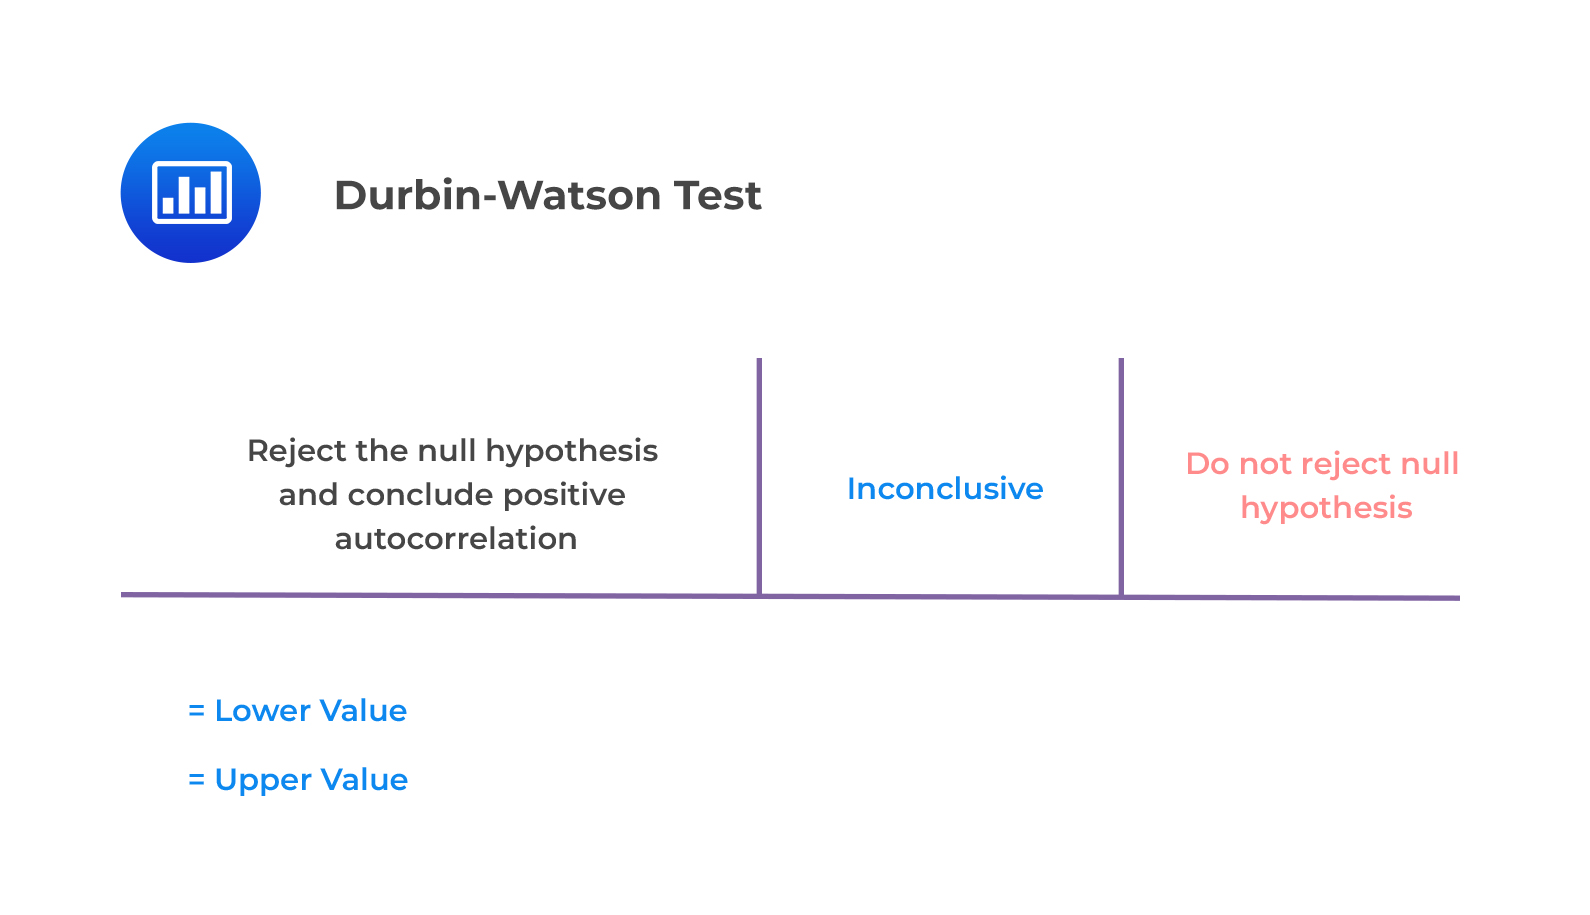 Durbin-Watson Test